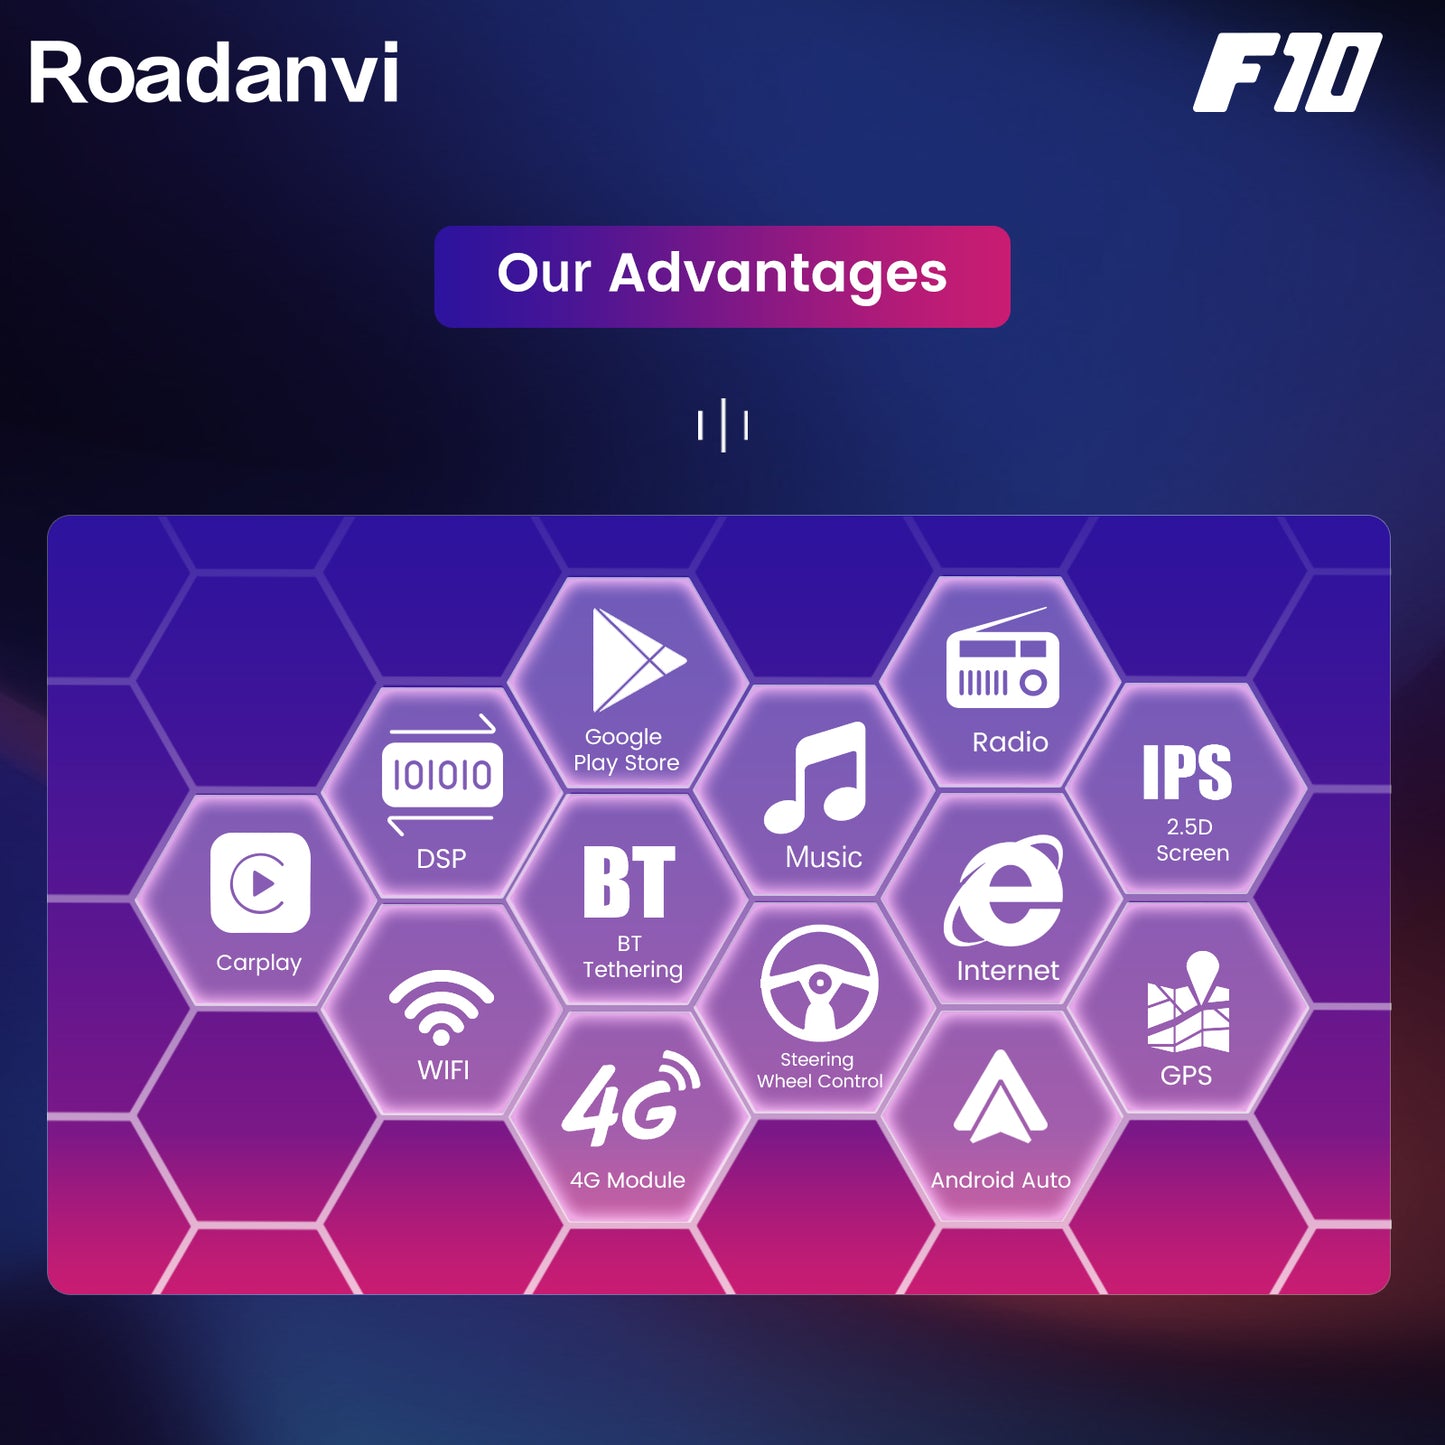 Roadanvi F10 For Double Din Universal Car Stereo 10.2 inch Android Auto Carplay 1280*720 Detachable Rotatable Audio